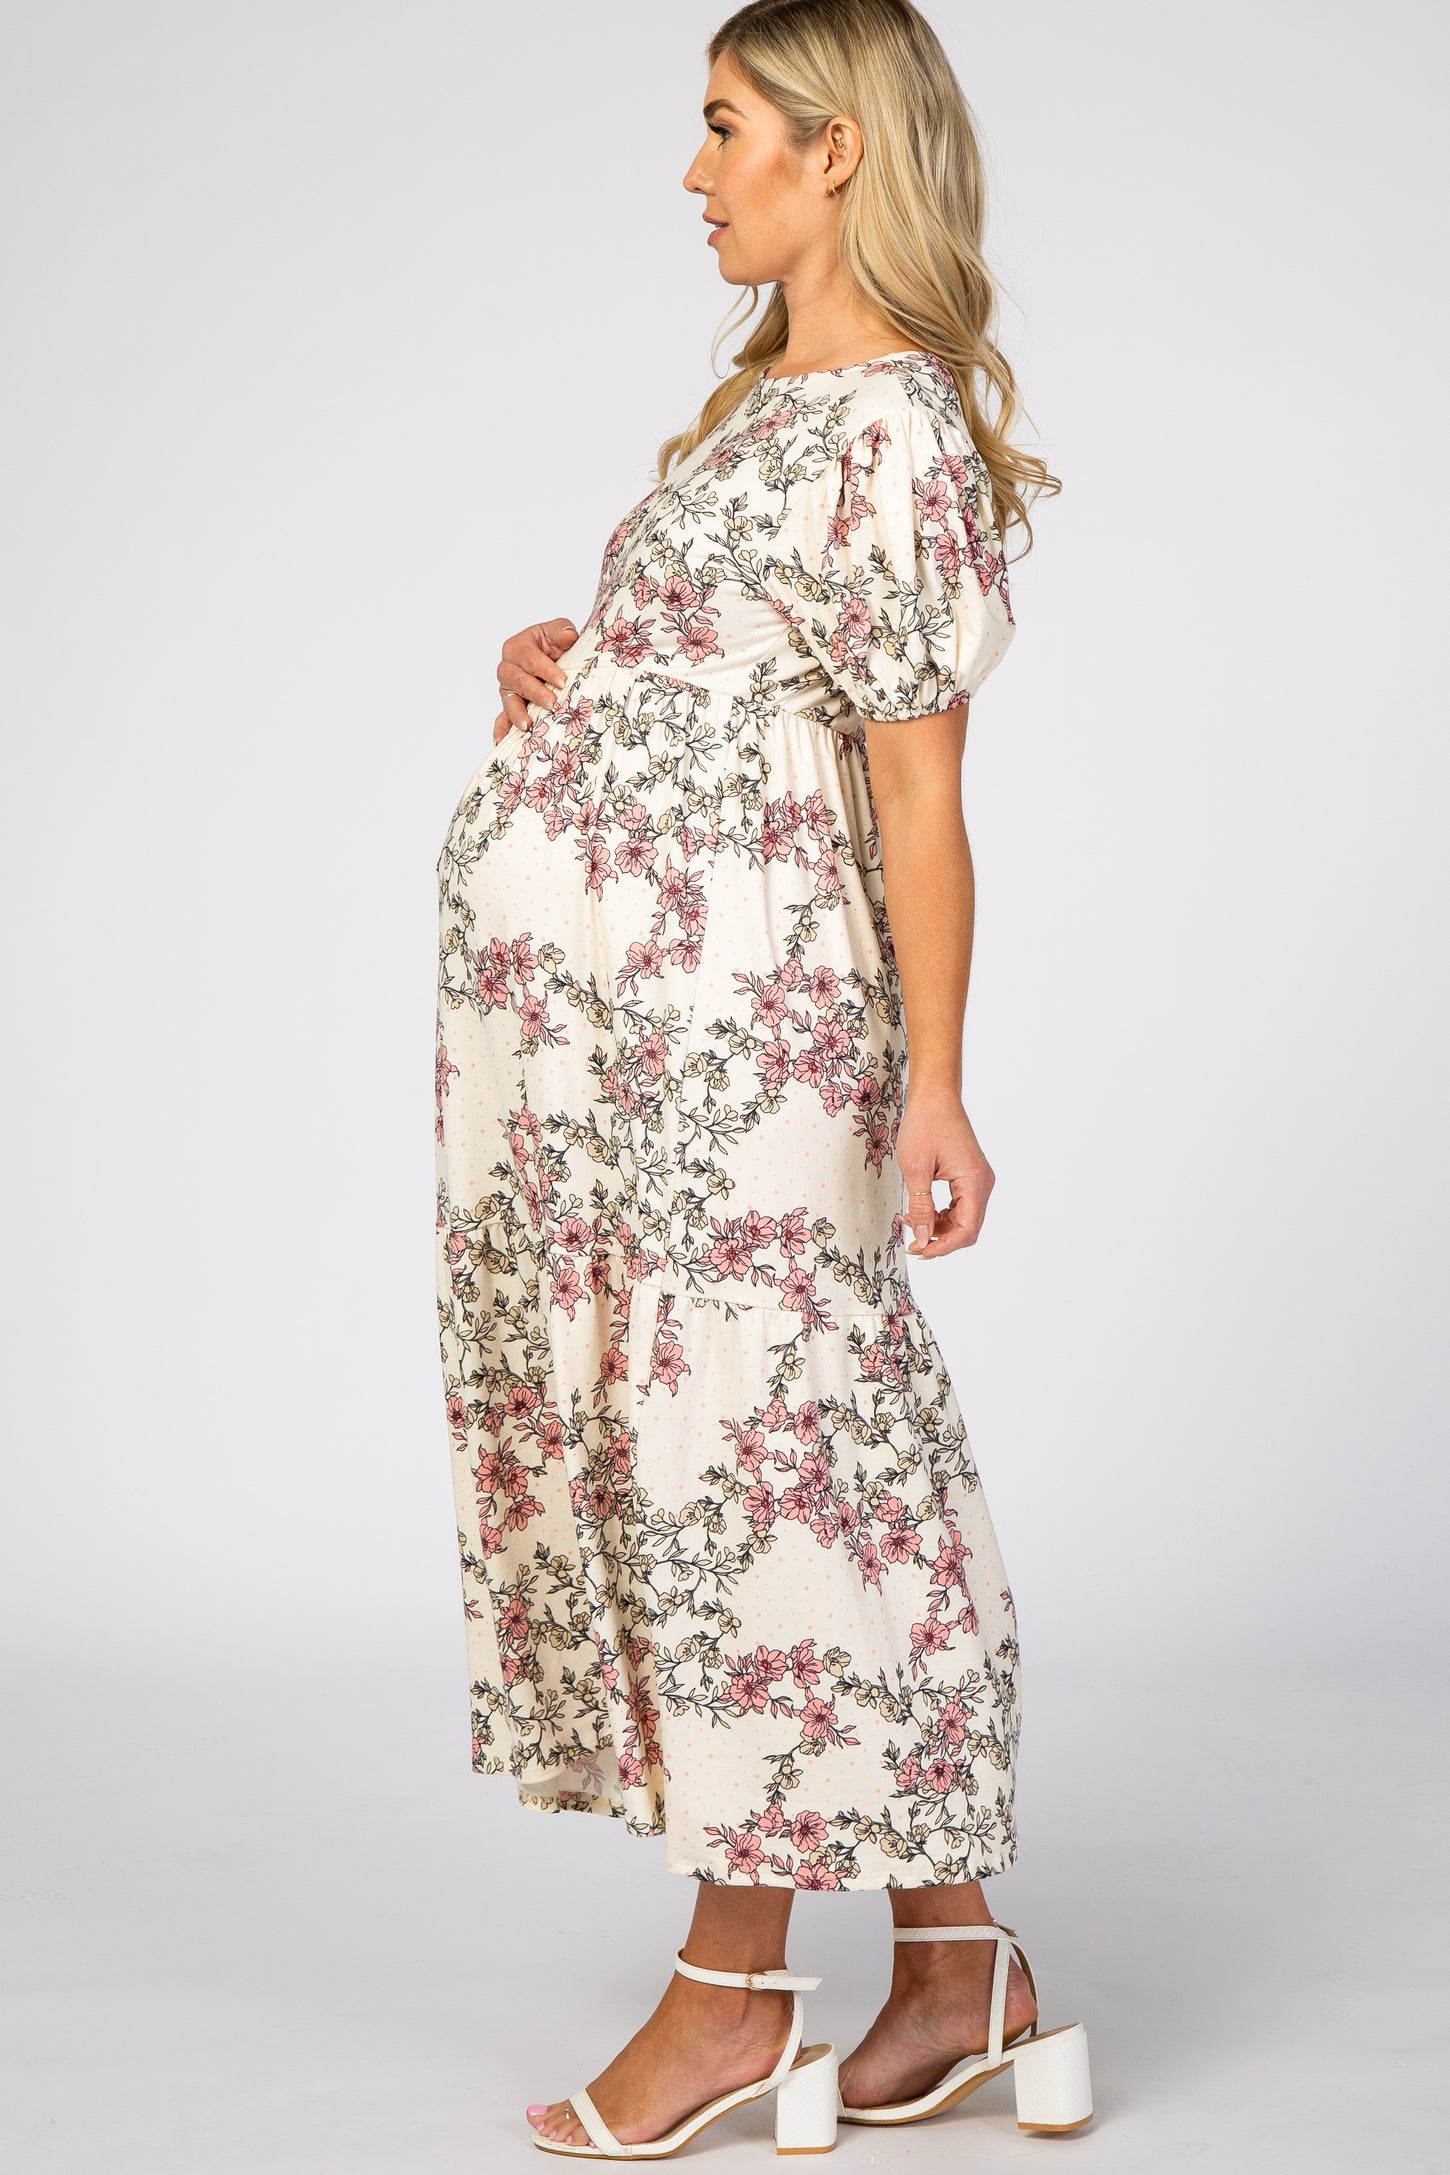 Ivory Floral Empire Waist Ruffle Hem Maternity Midi Dress